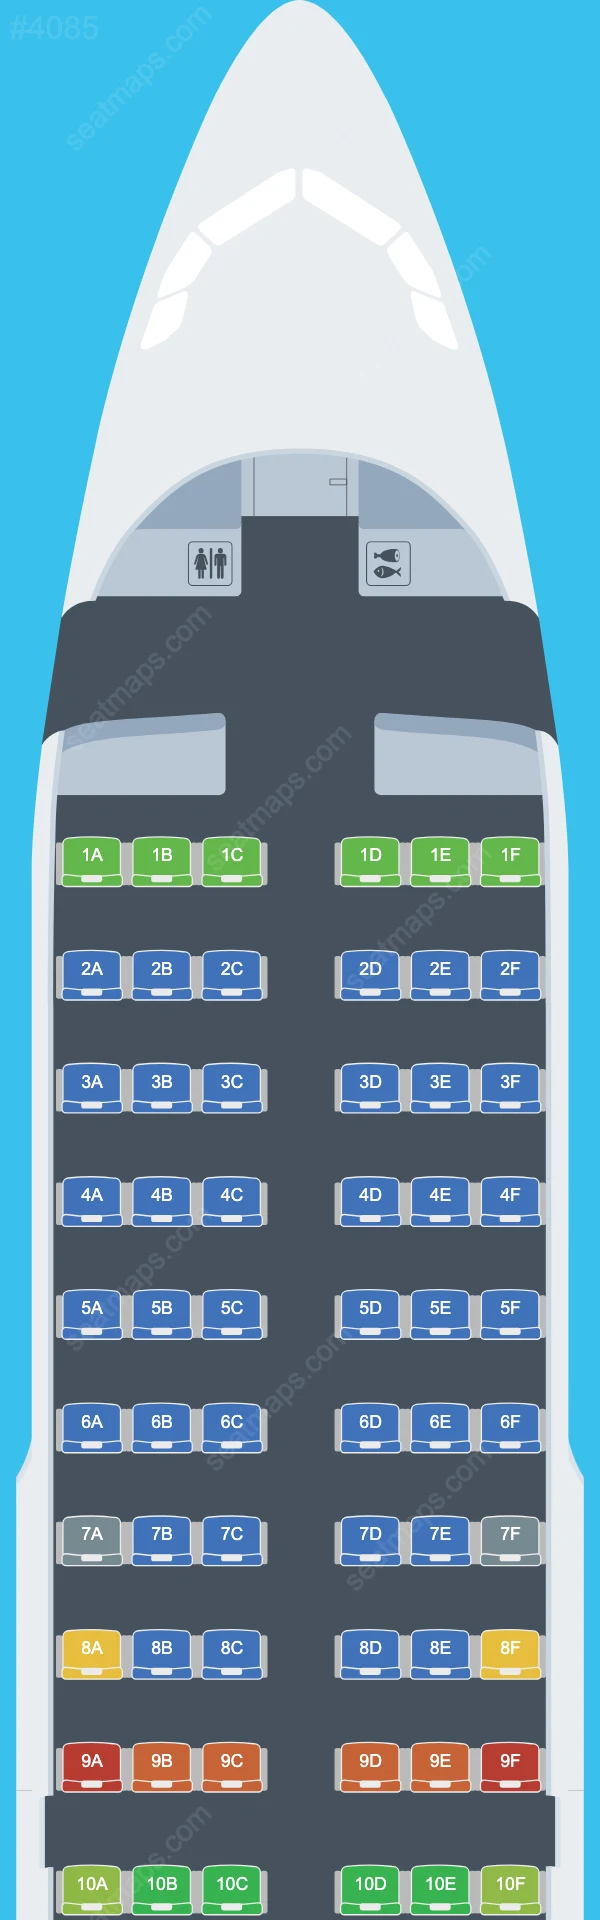 British Airways Airbus A319 Seat Maps A319-100 V.1